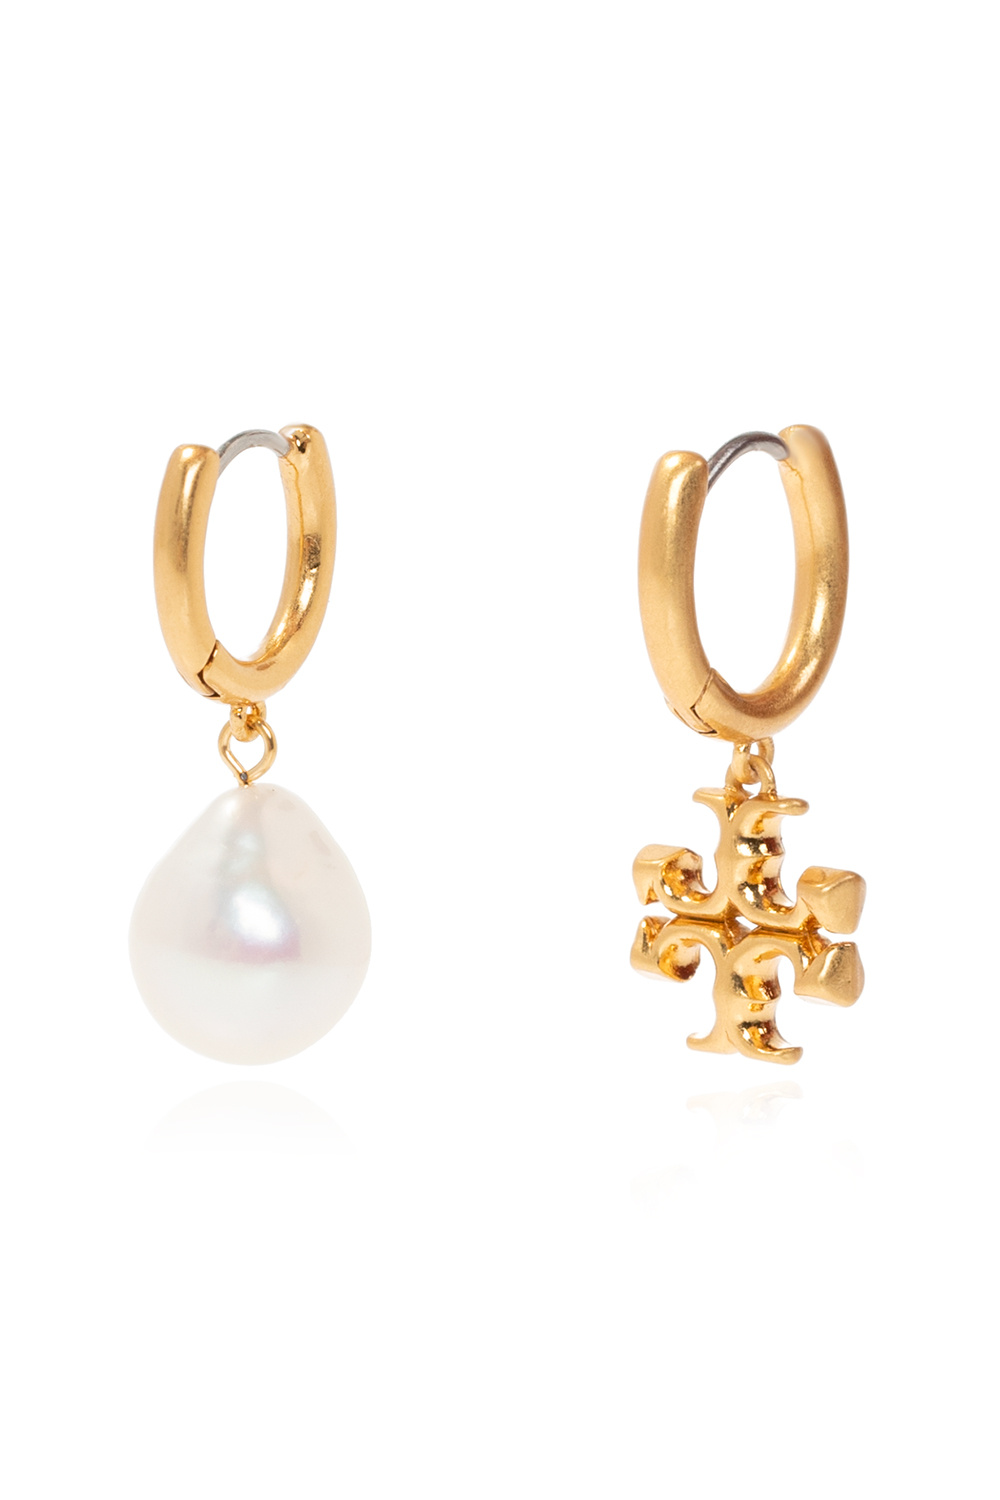 Tory Burch Ivory pearl earrings